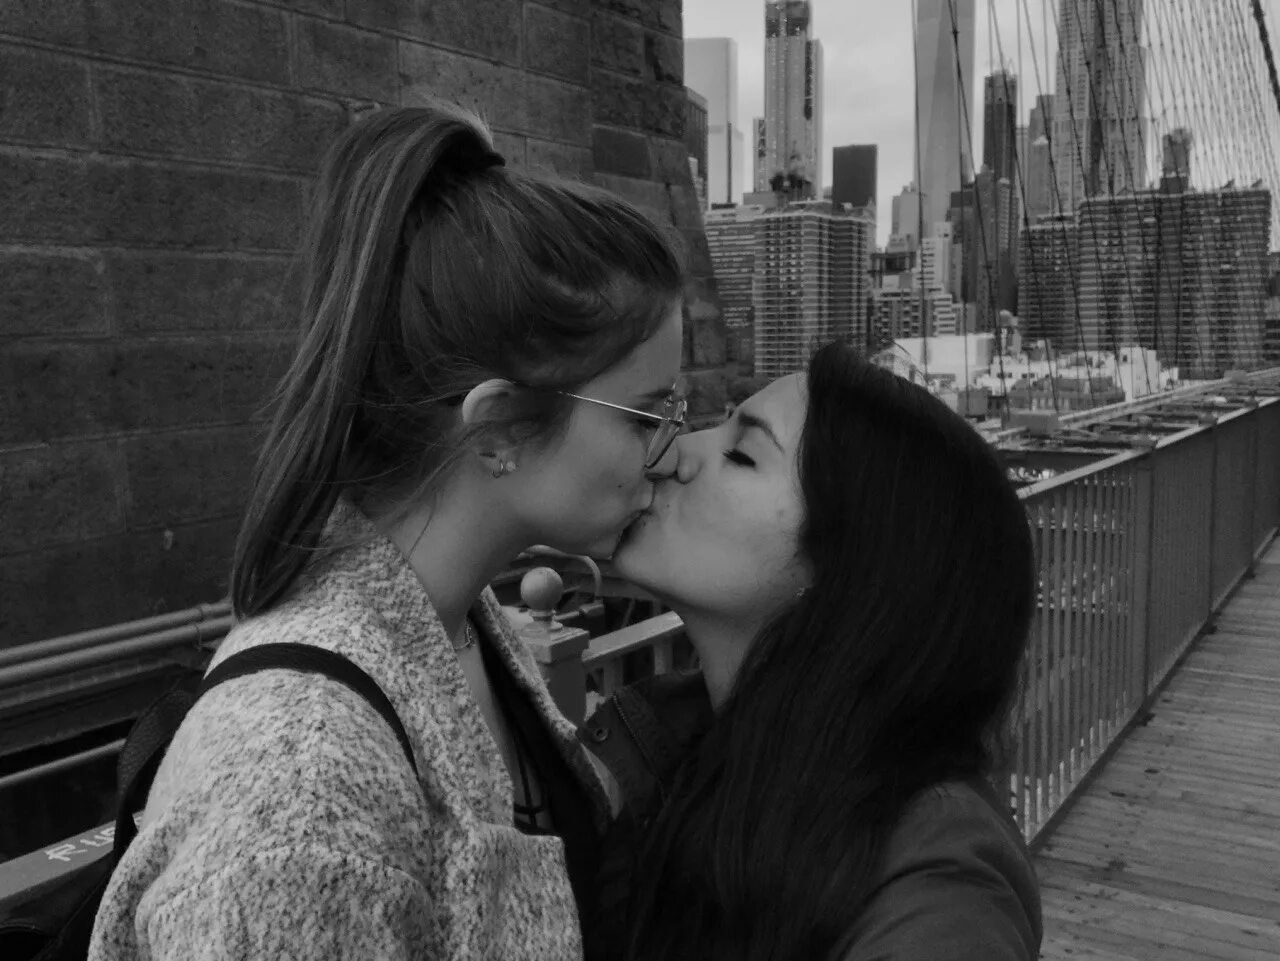 Lesbian net. Поцелуй девушек. Девушки целуются. Поцелуй девушки с девушкой. Поцелуй двух девушек.